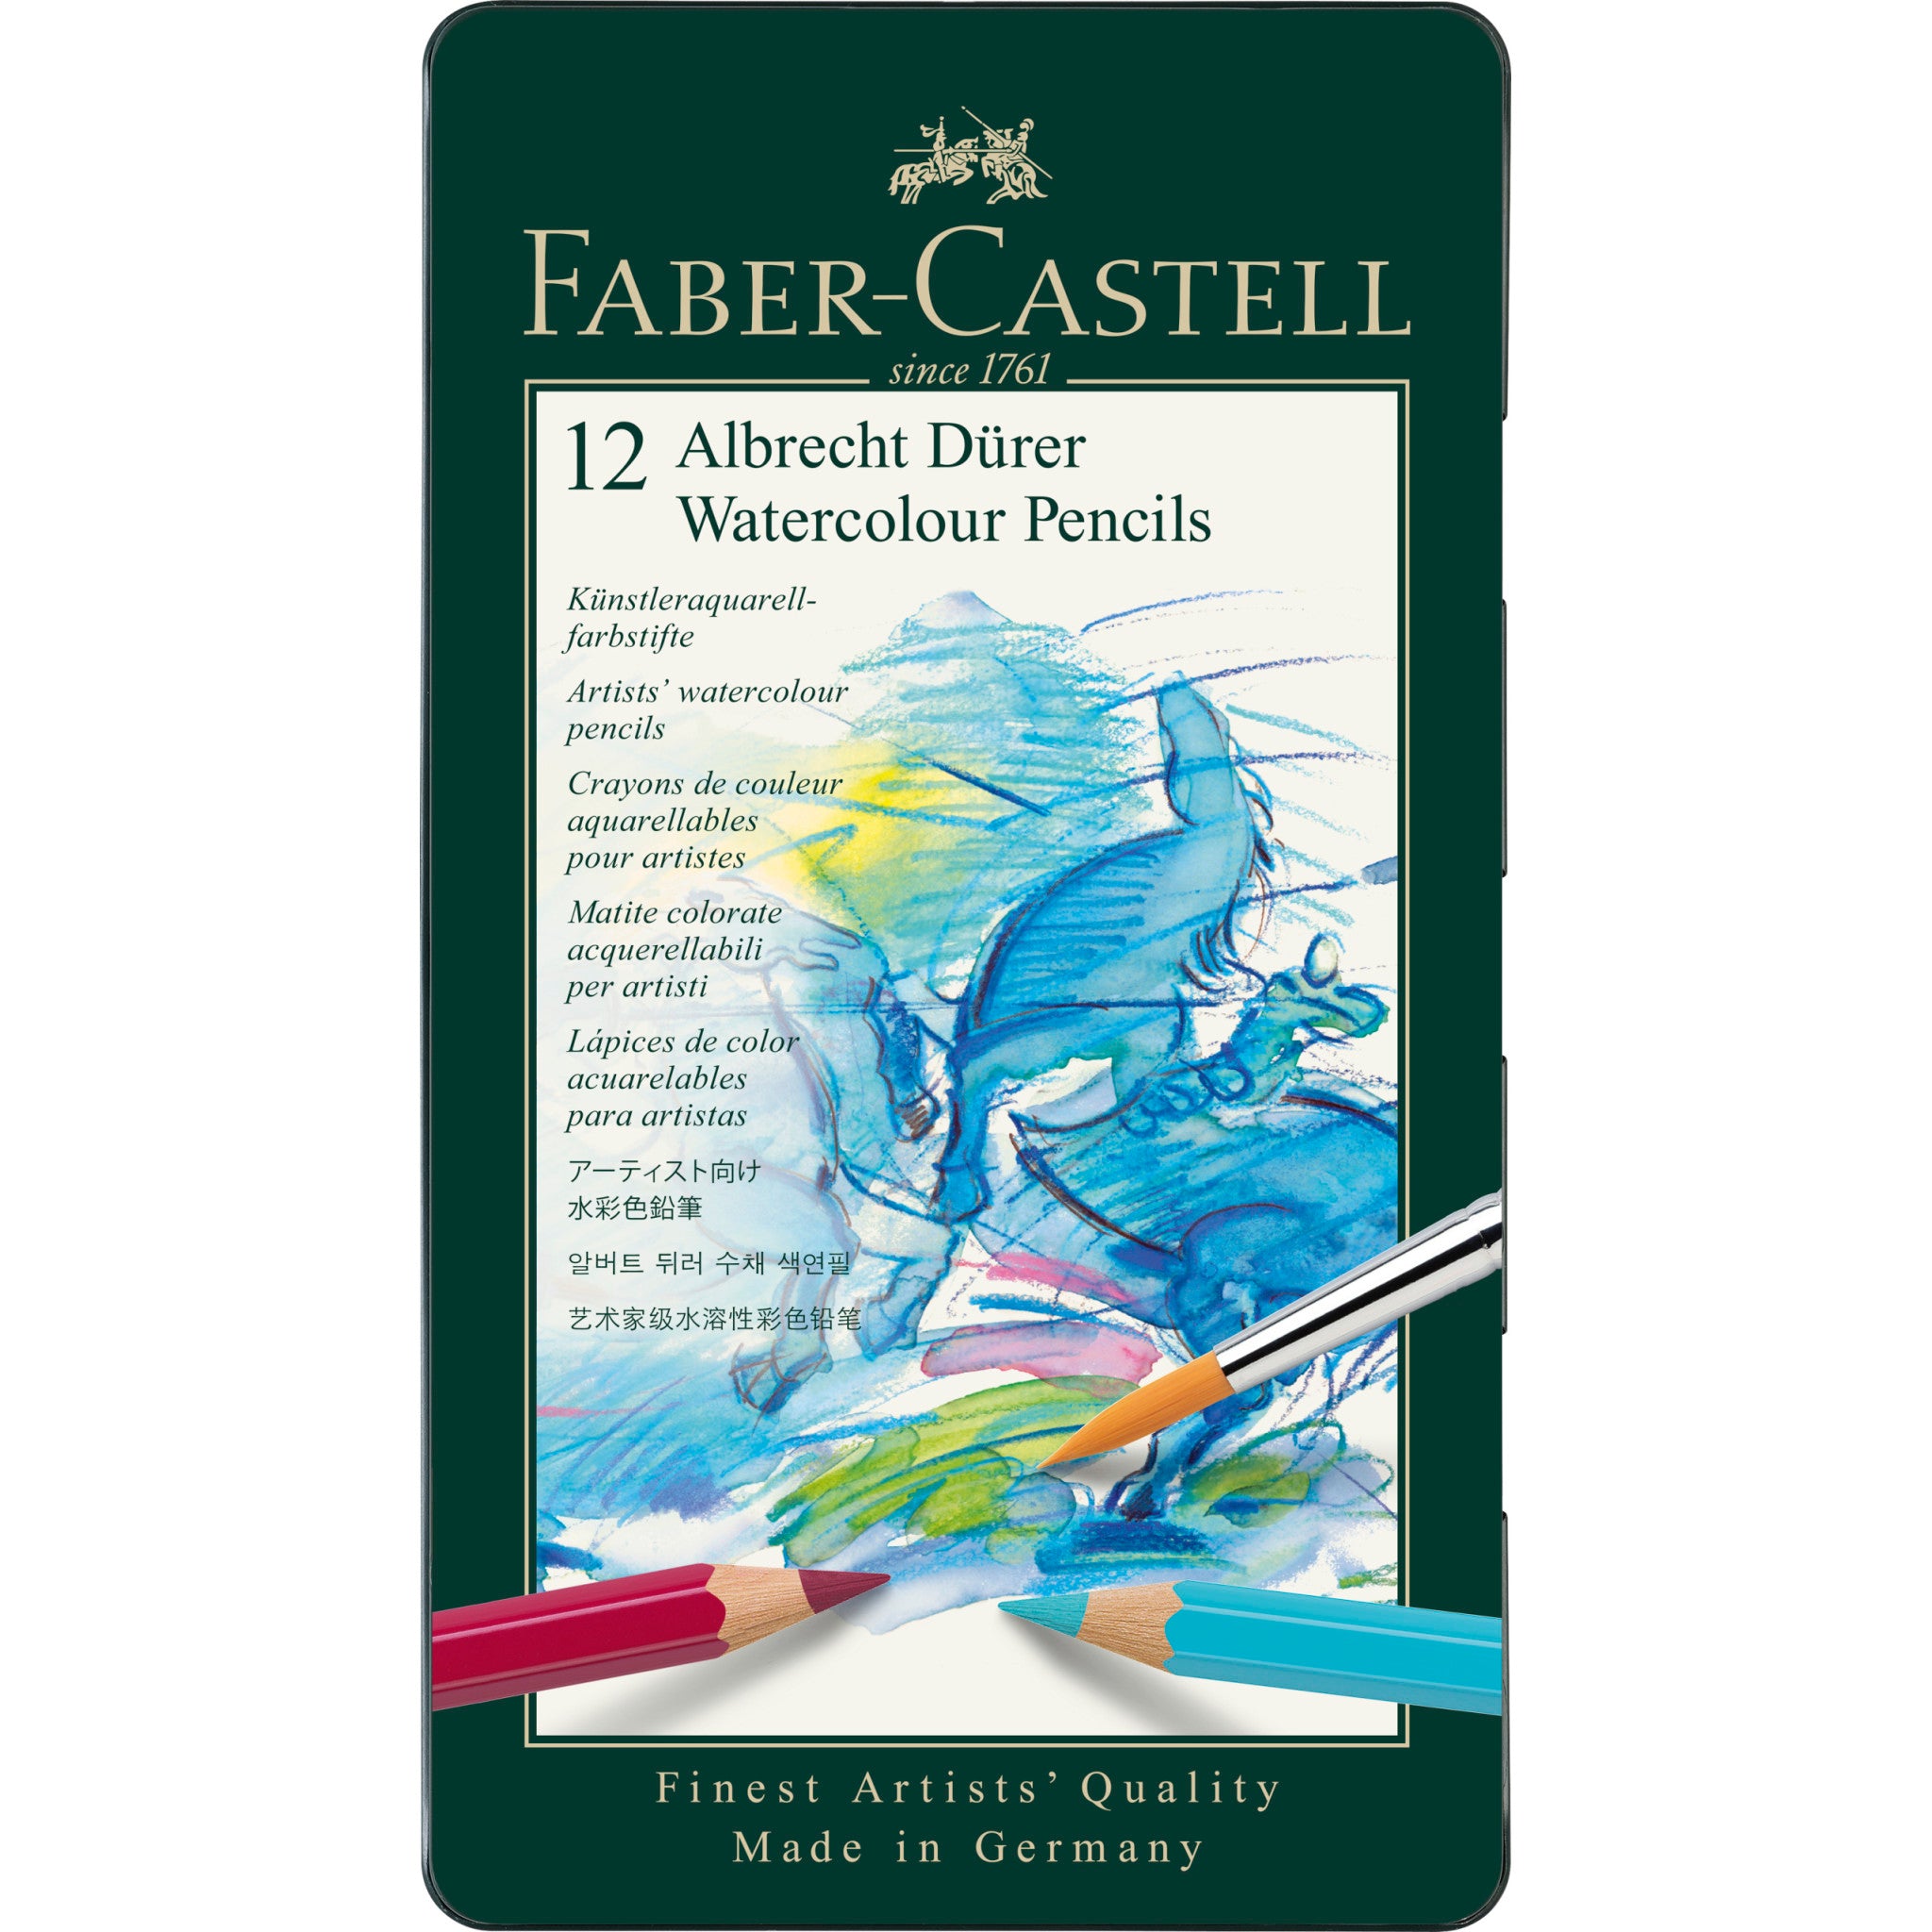 Faber-Castell Albrecht Durer Watercolor Pencil Set - 12 Assorted Colors